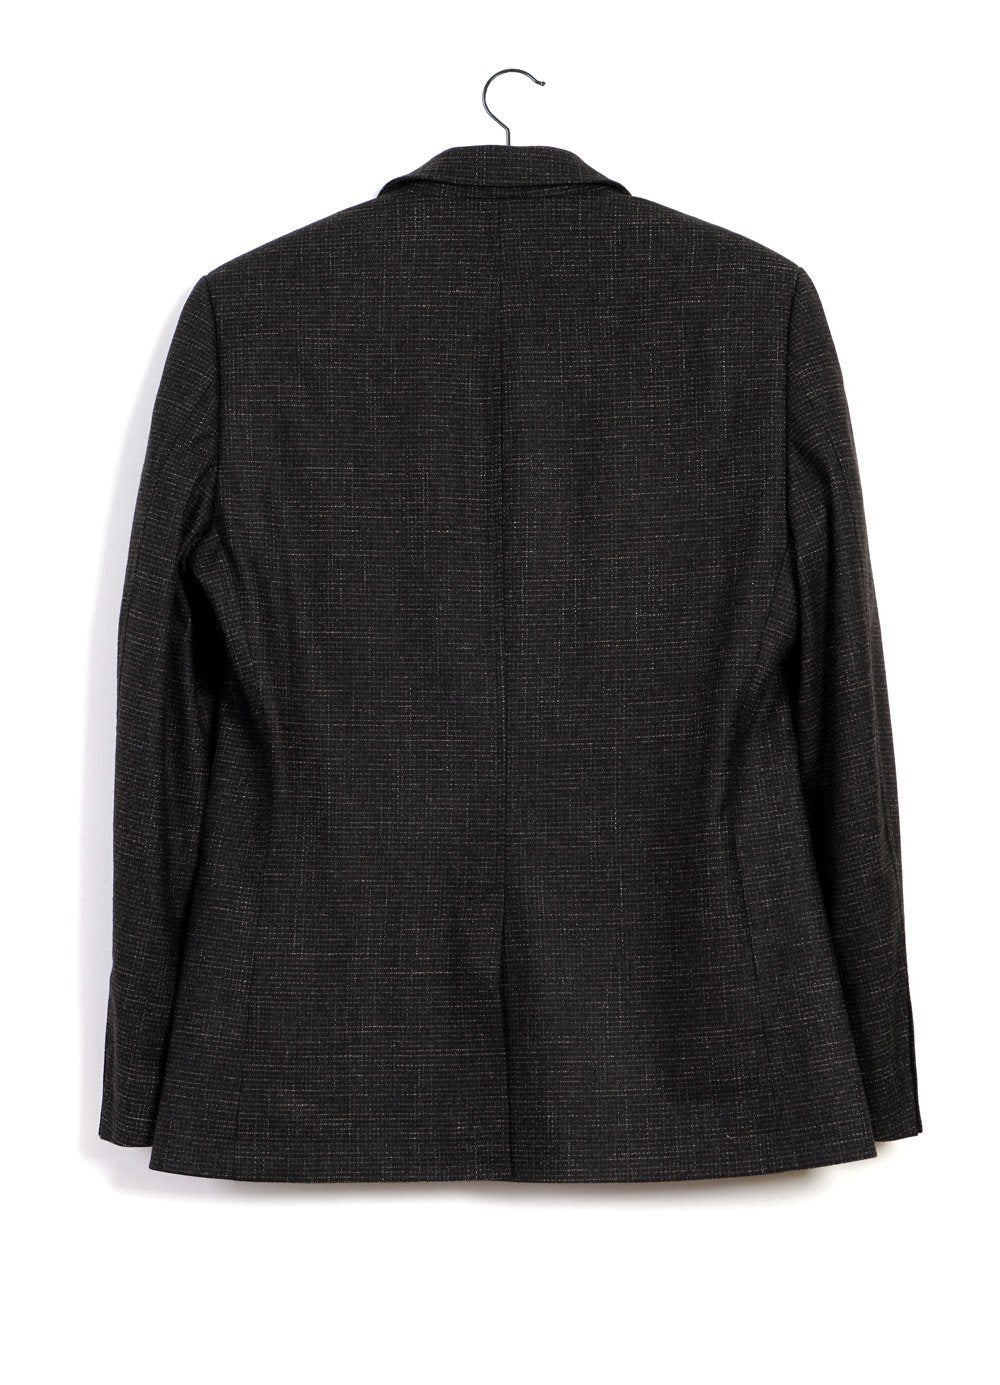 HANSEN Garments - CHRISTOFFER | Classic Two Button Blazer | Macchiato - HANSEN Garments